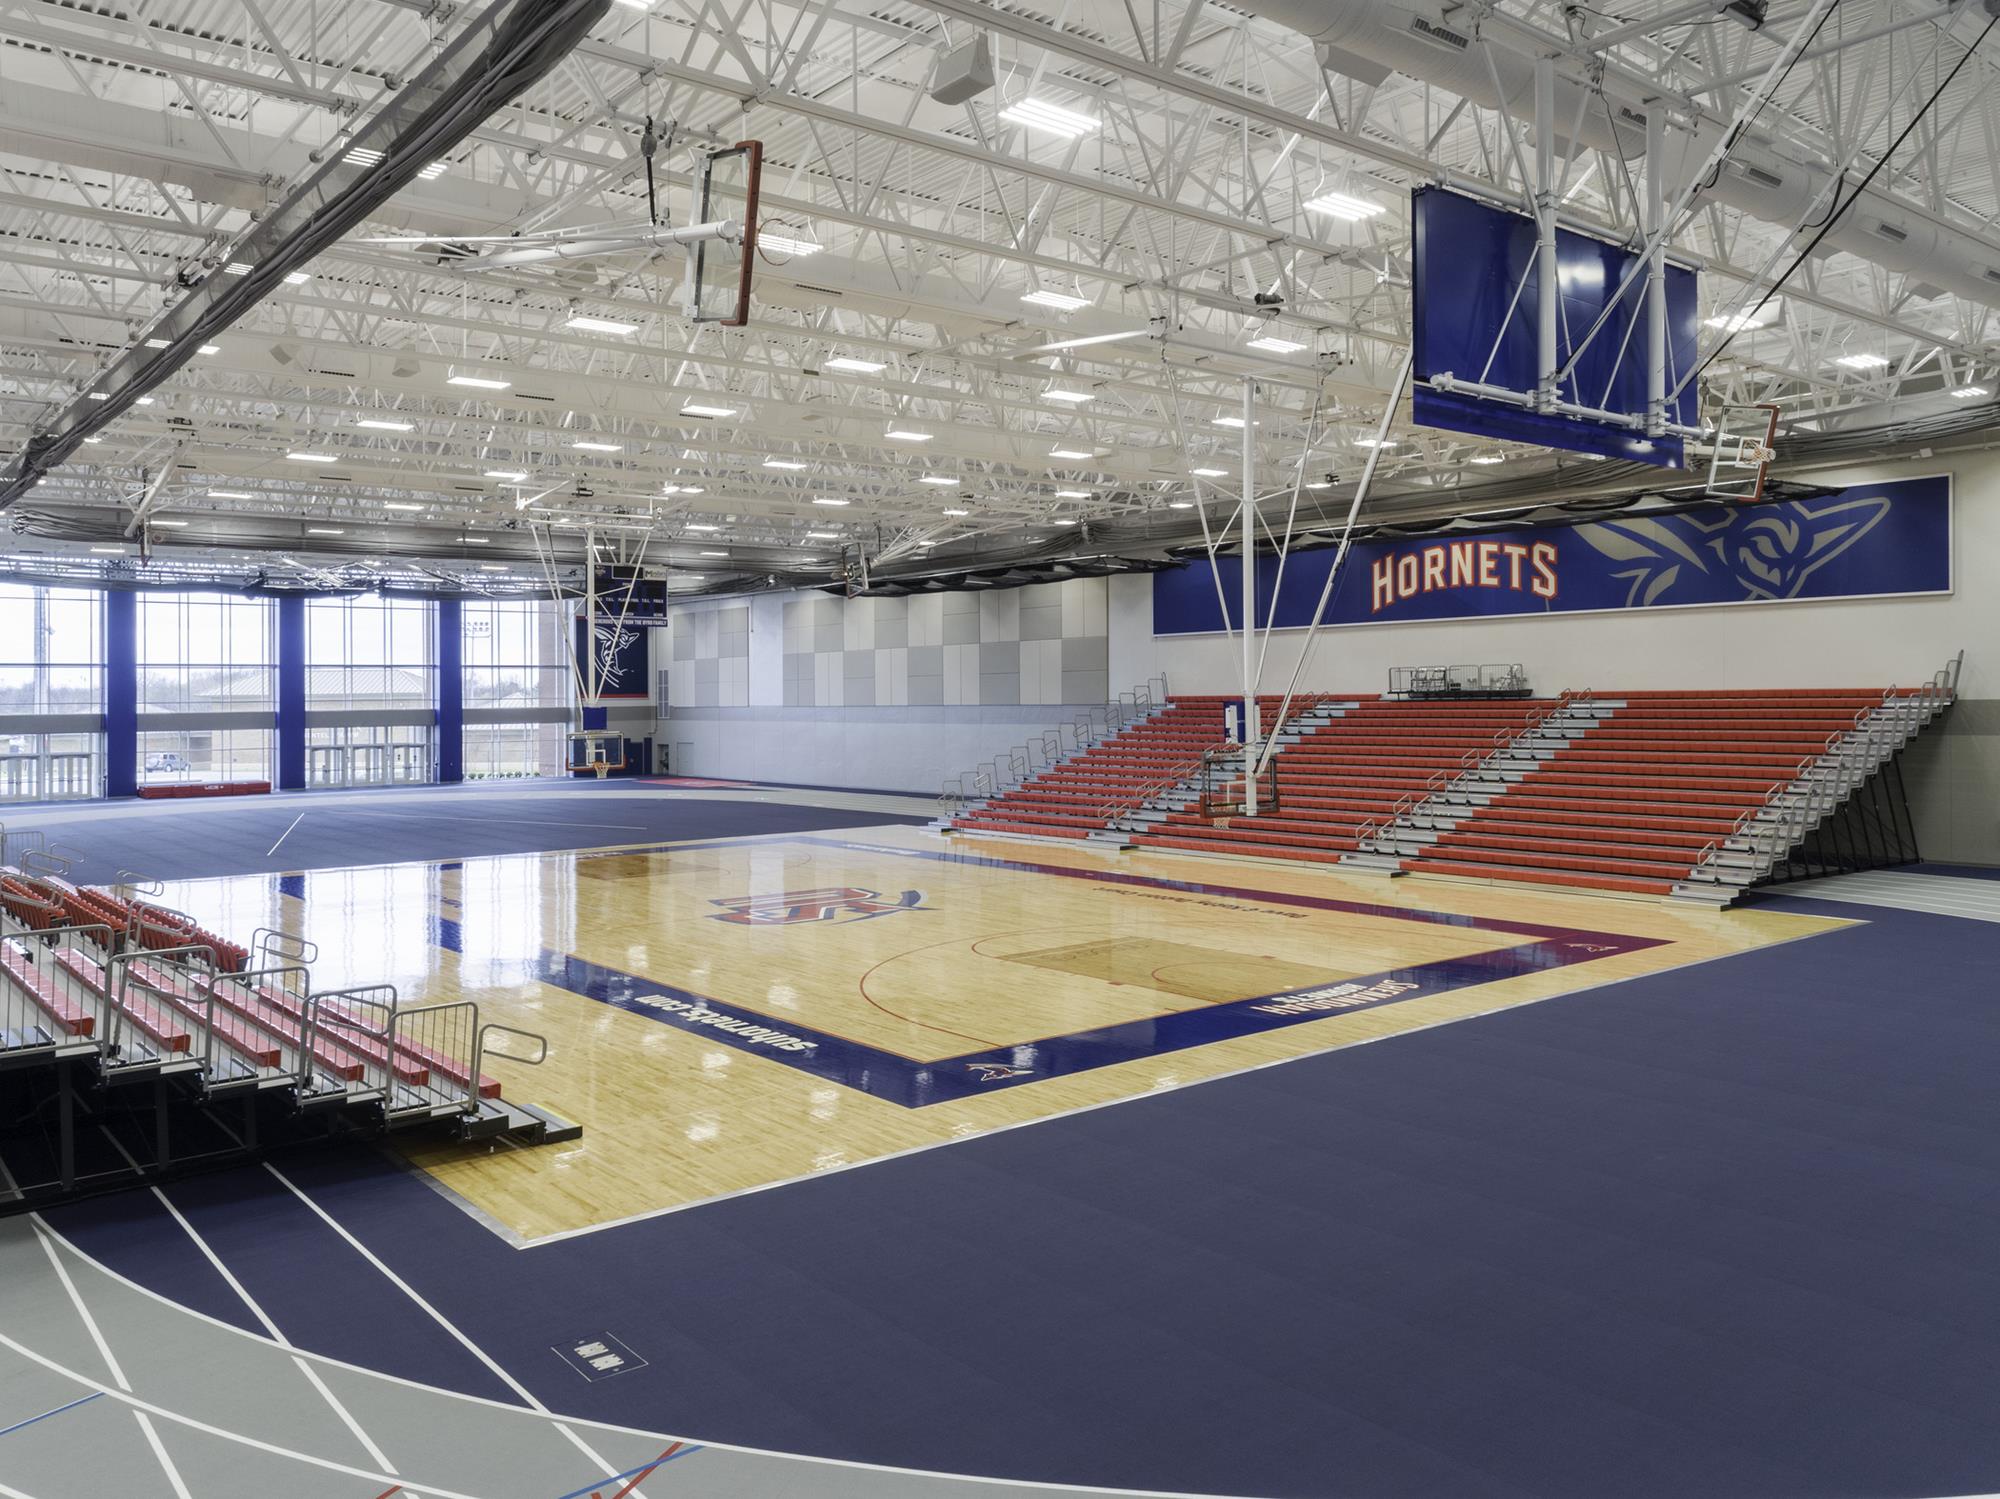 Shenandoah University - Athletics and Event Center